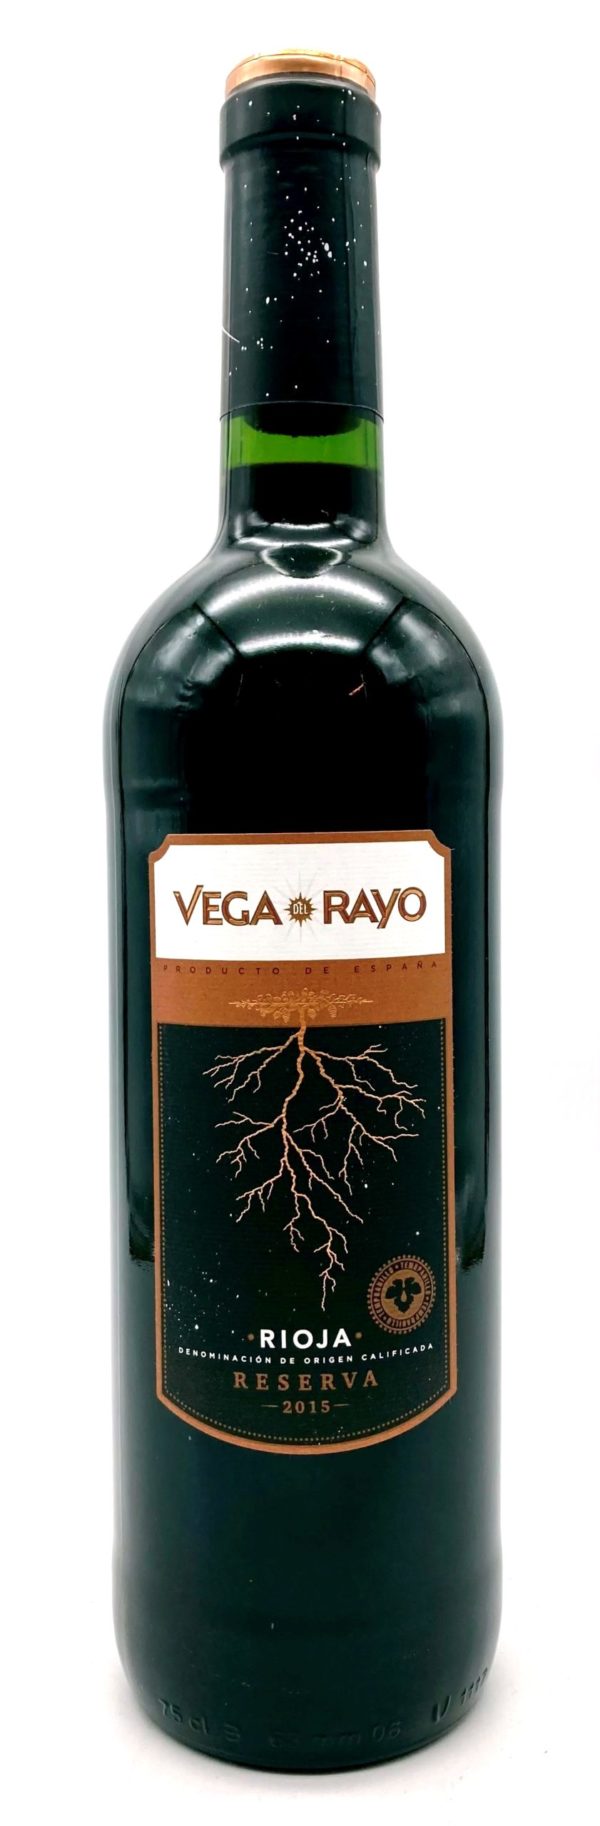 Rioja Vega del Rayo Reserva 2015, Edinburgh, Scotland